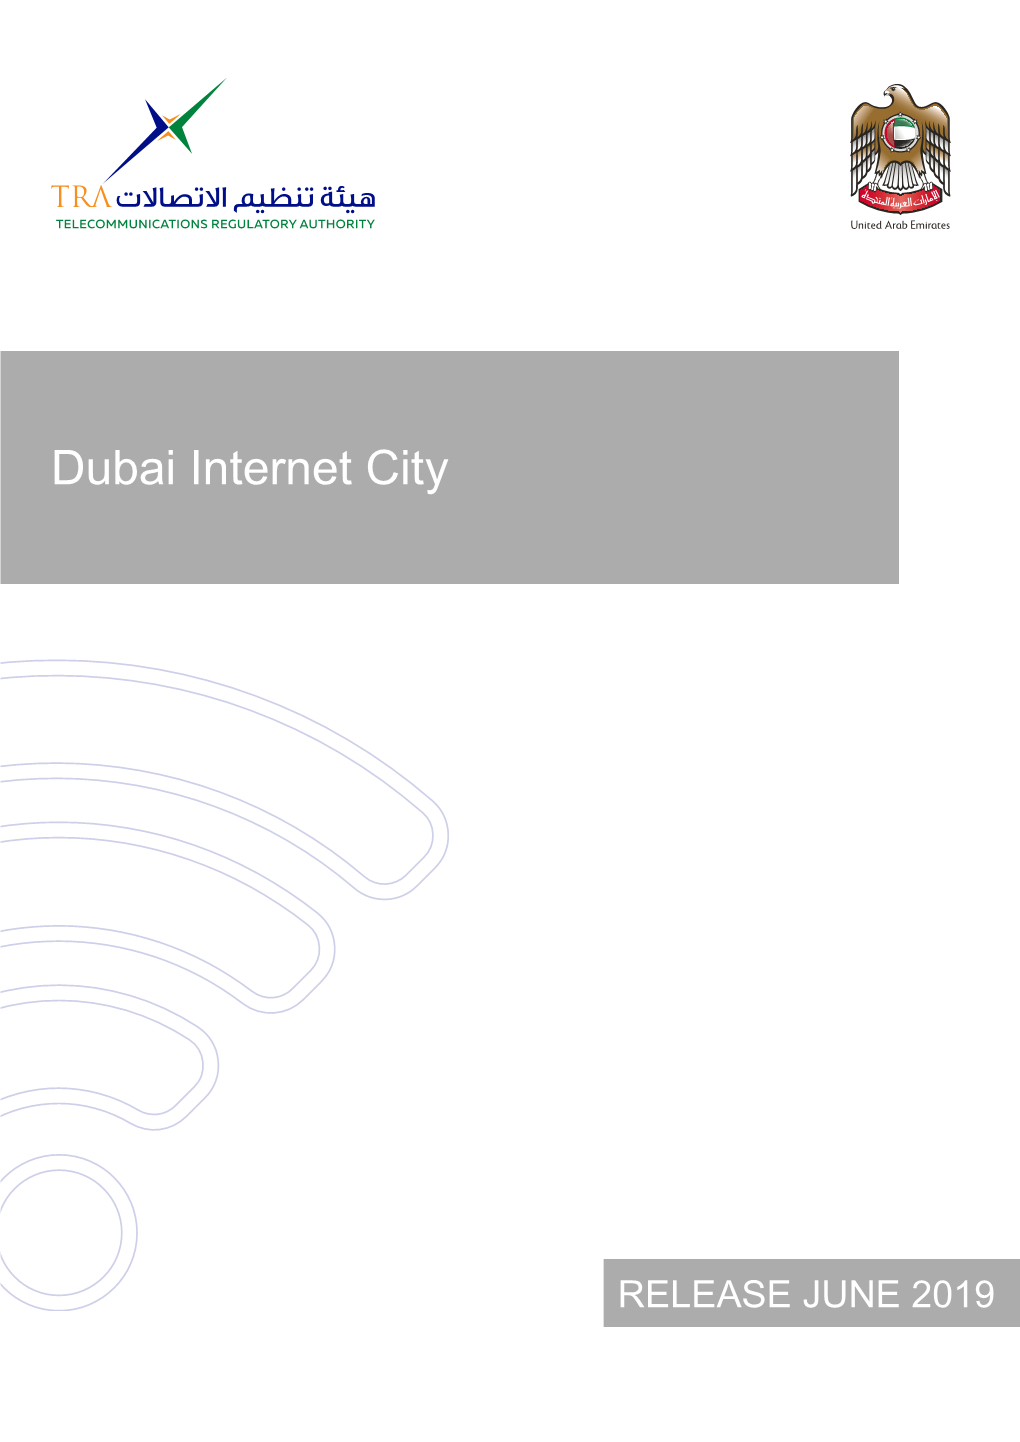 CS4-Dubai Internet City 5.0.Docx